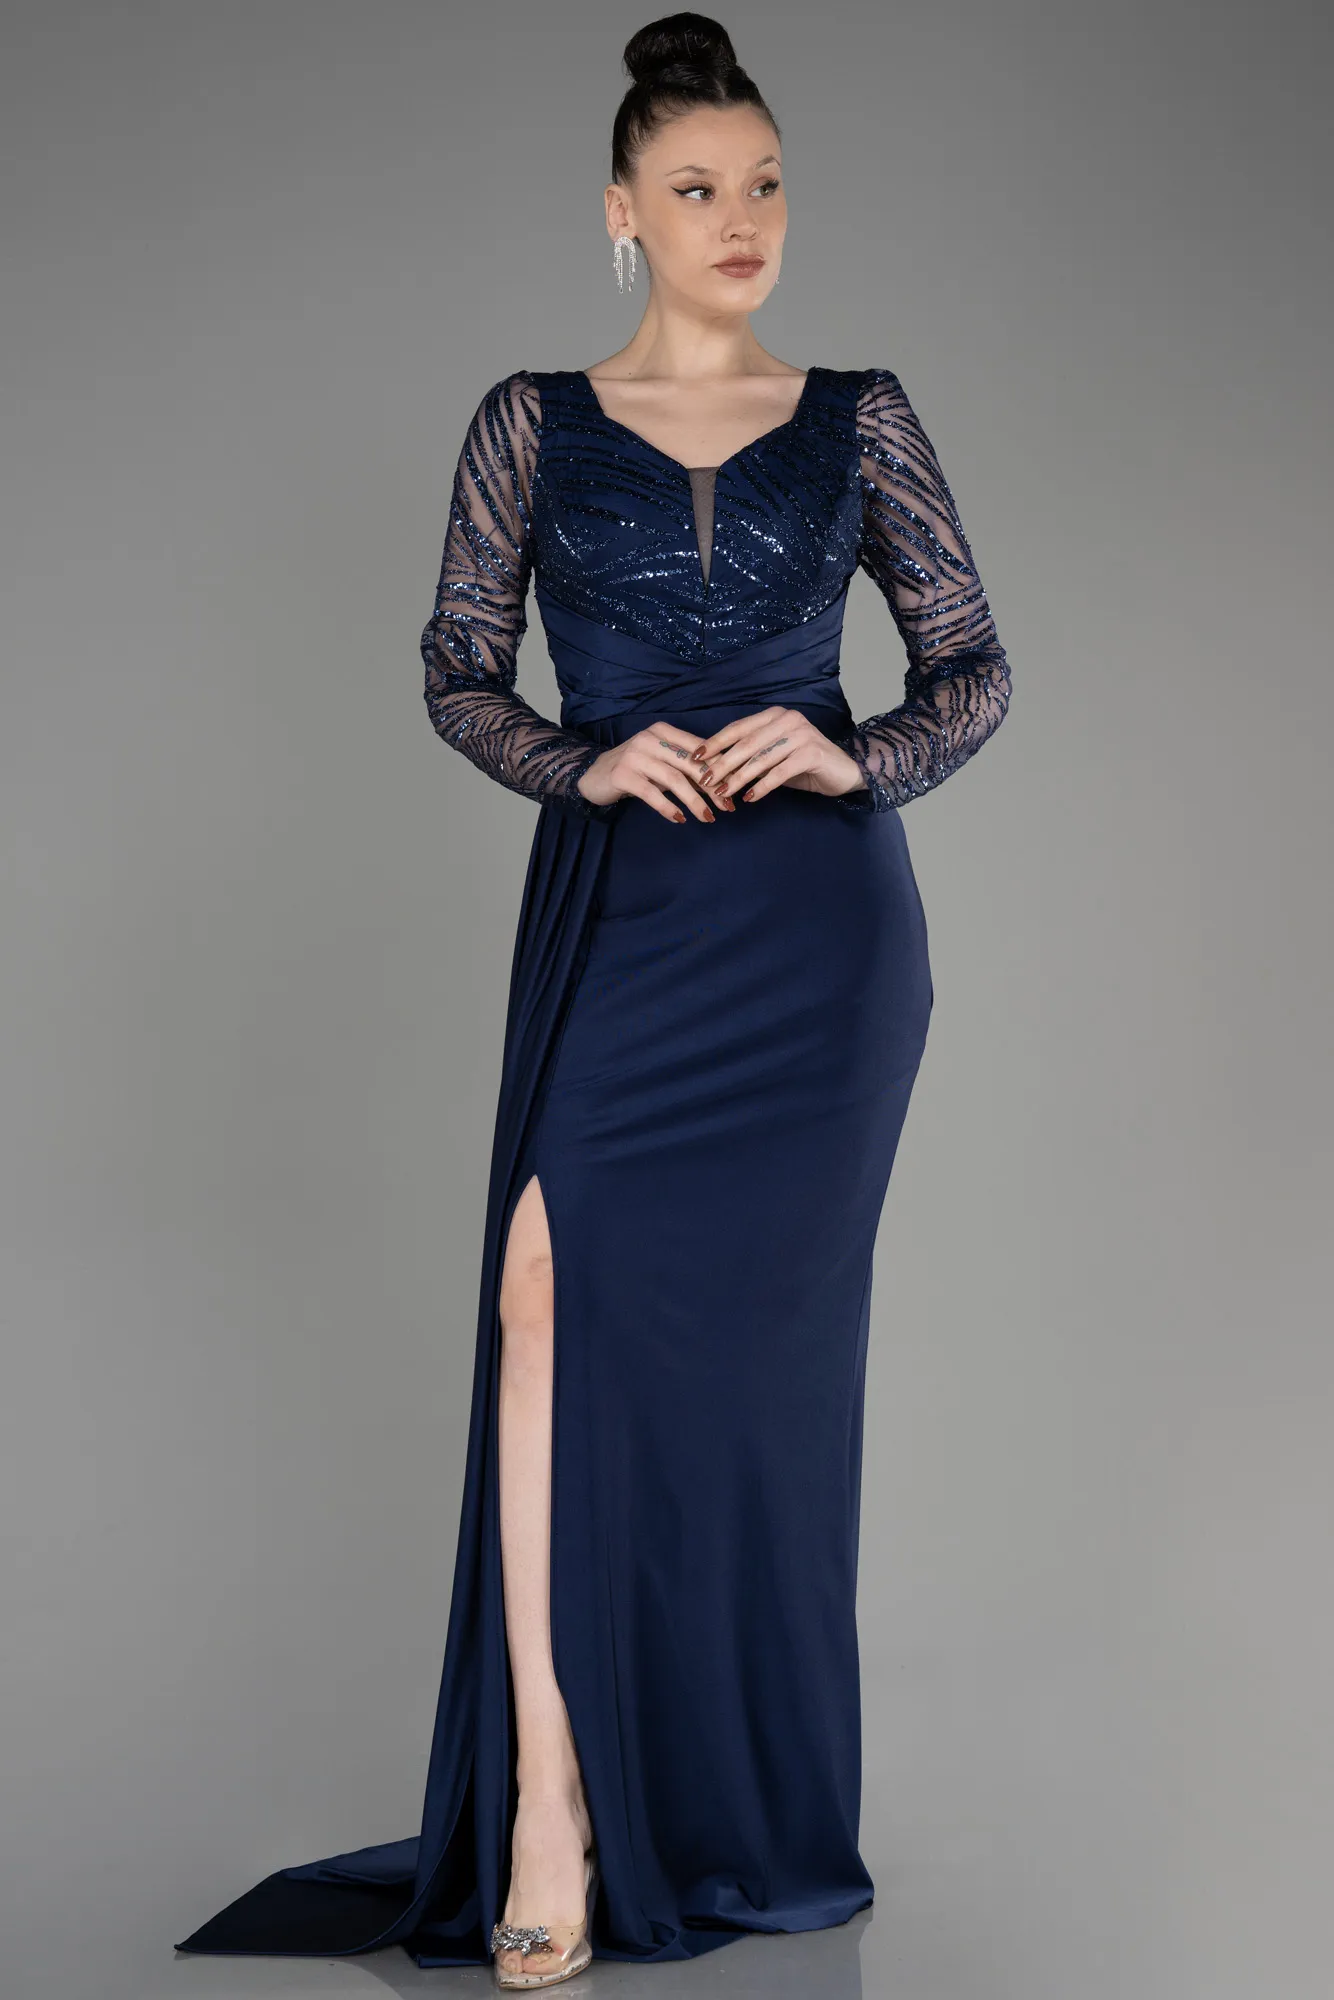 Navy Blue-Long Sleeve Evening Dress ABU3834